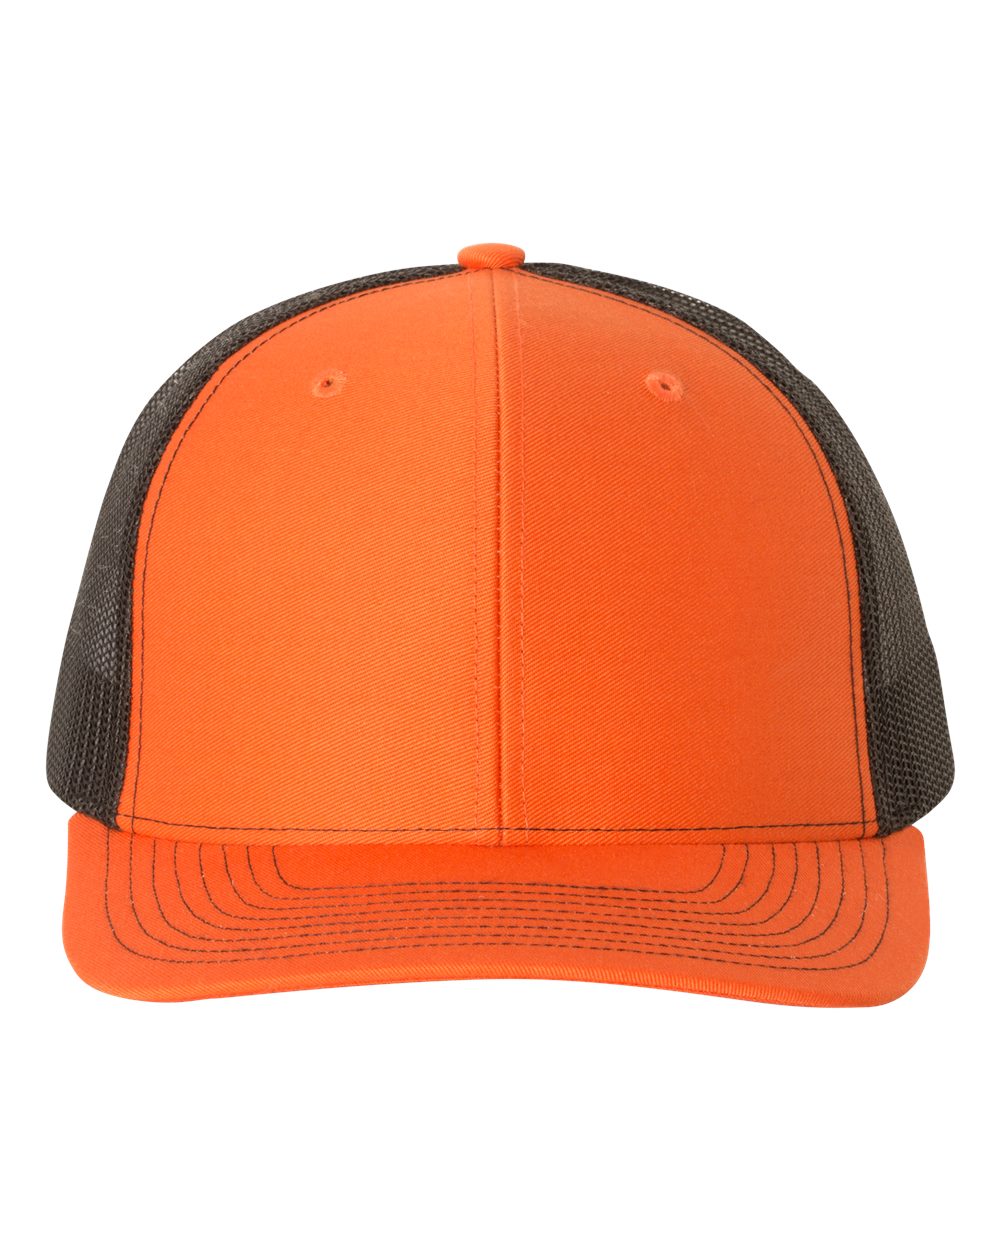 Richardson Snapback Trucker Hat (112) in Orange/Black